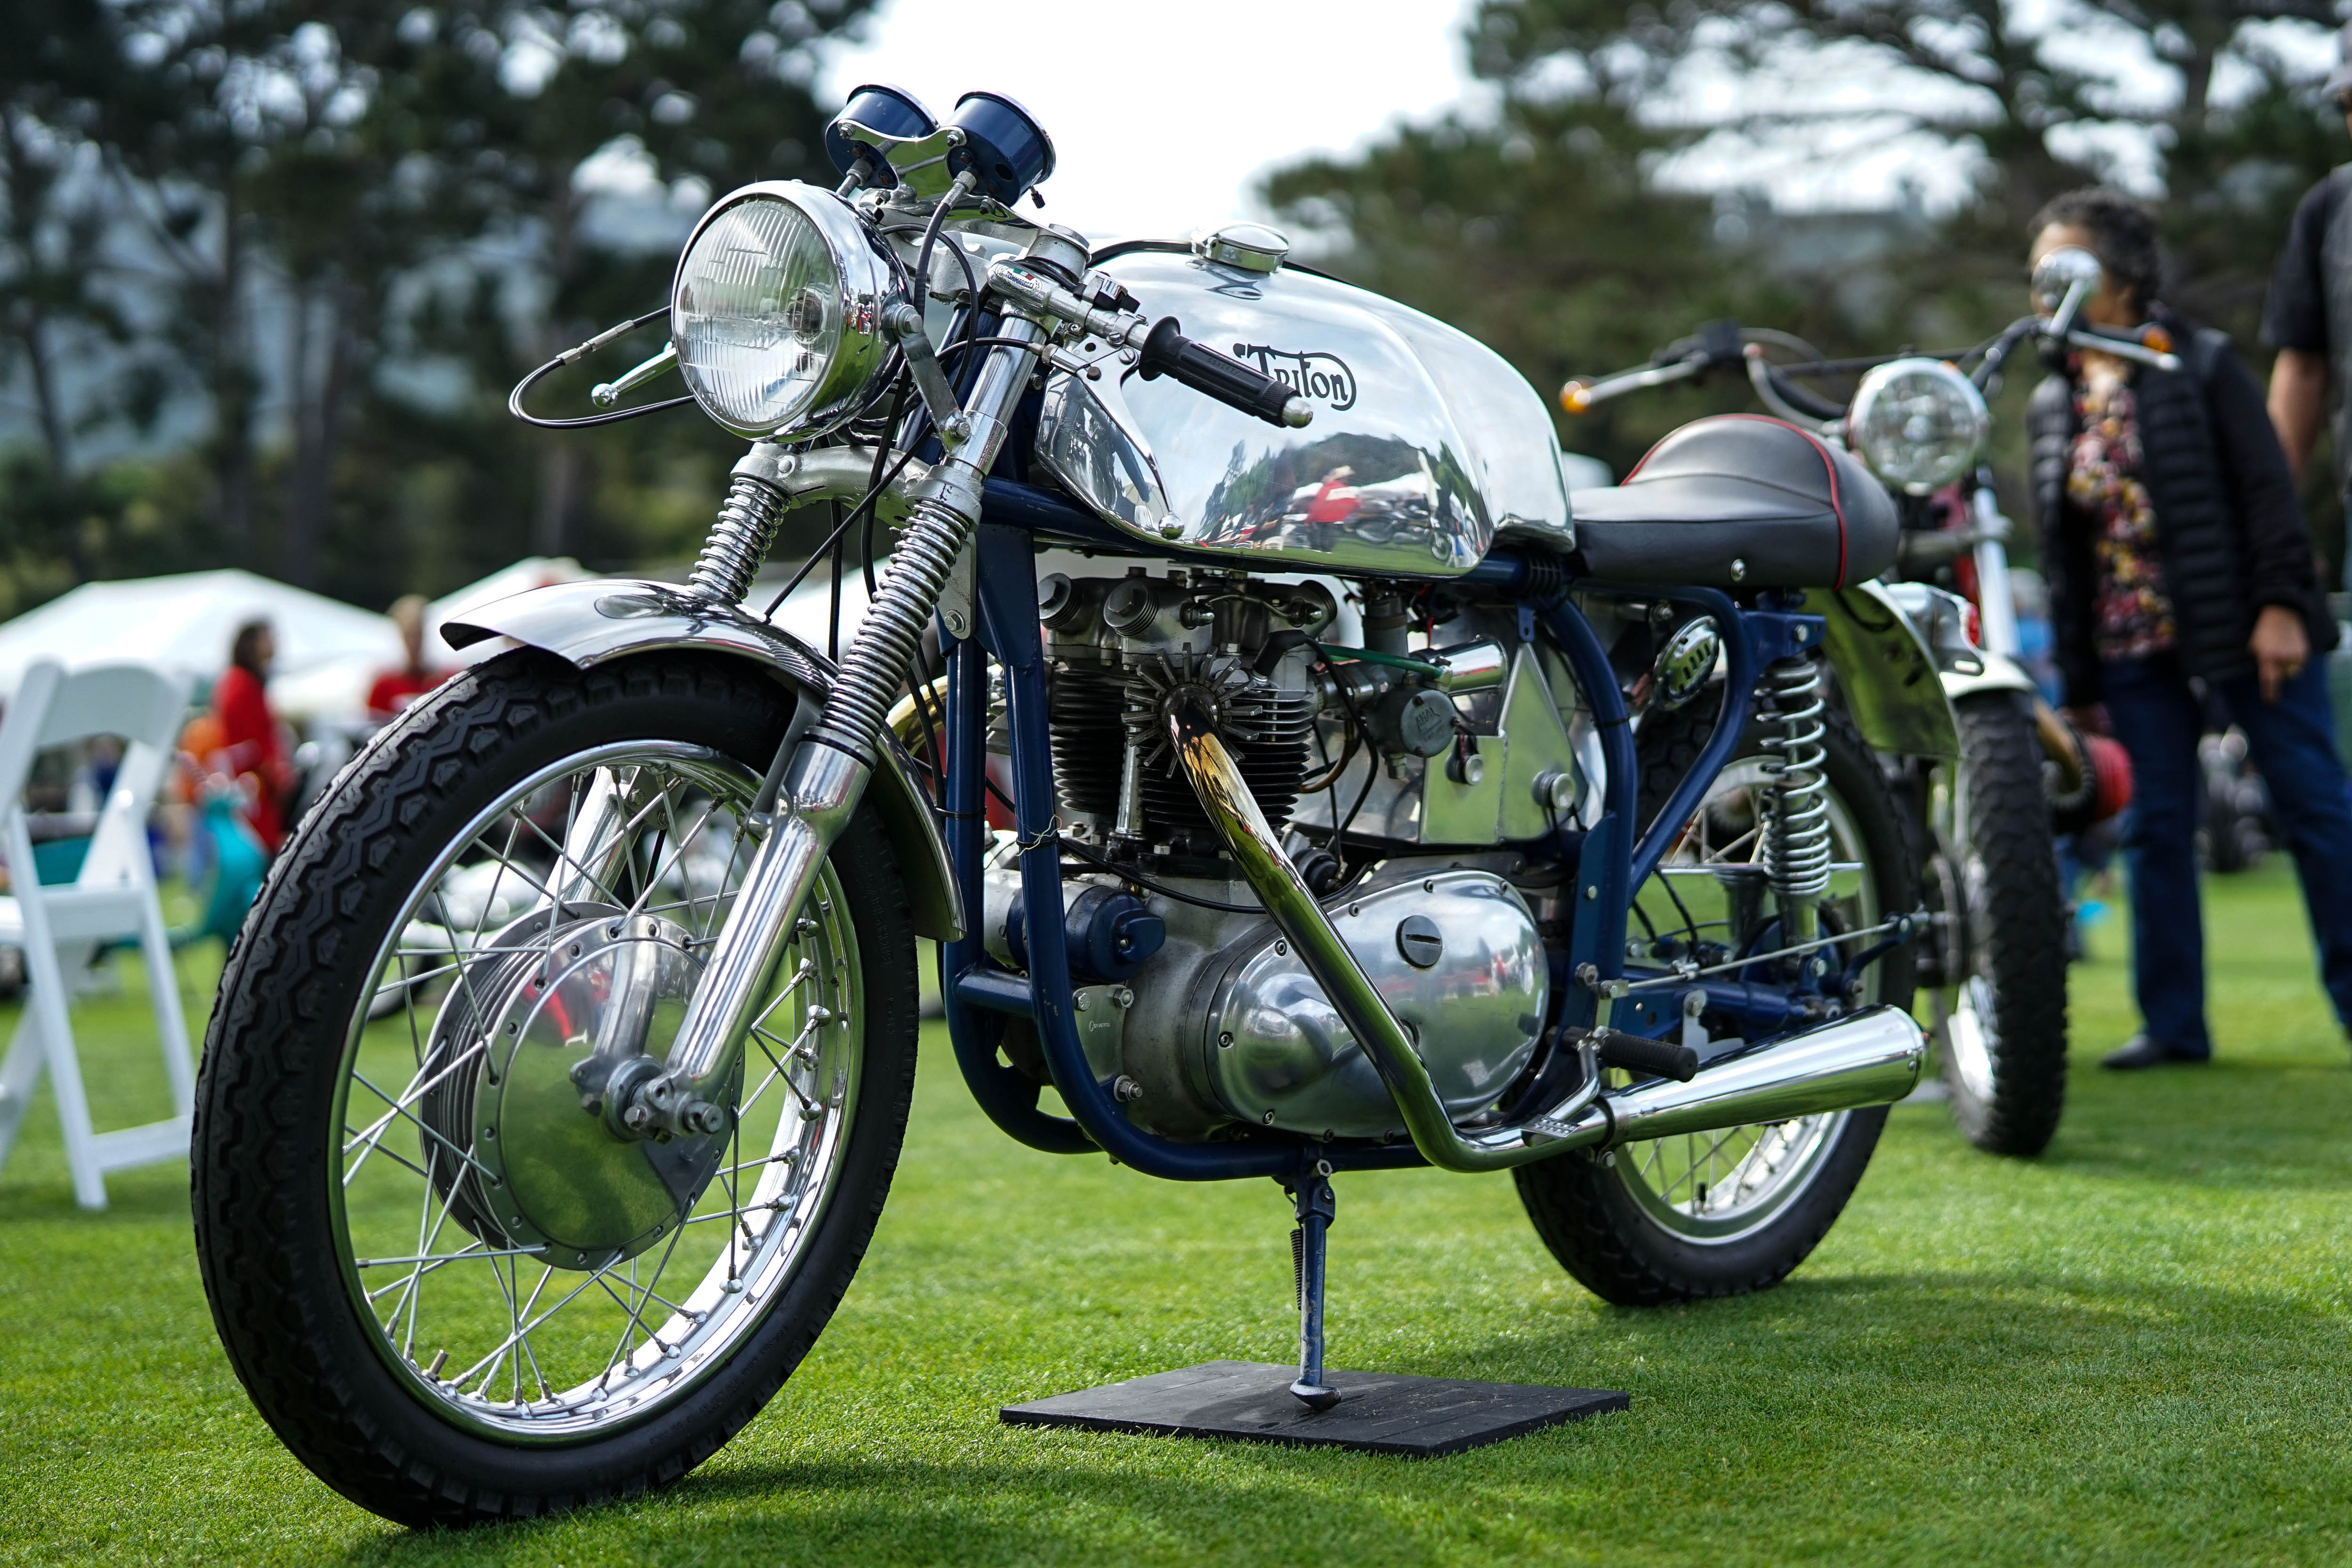 Vintage Triton cafe racer motorcycle